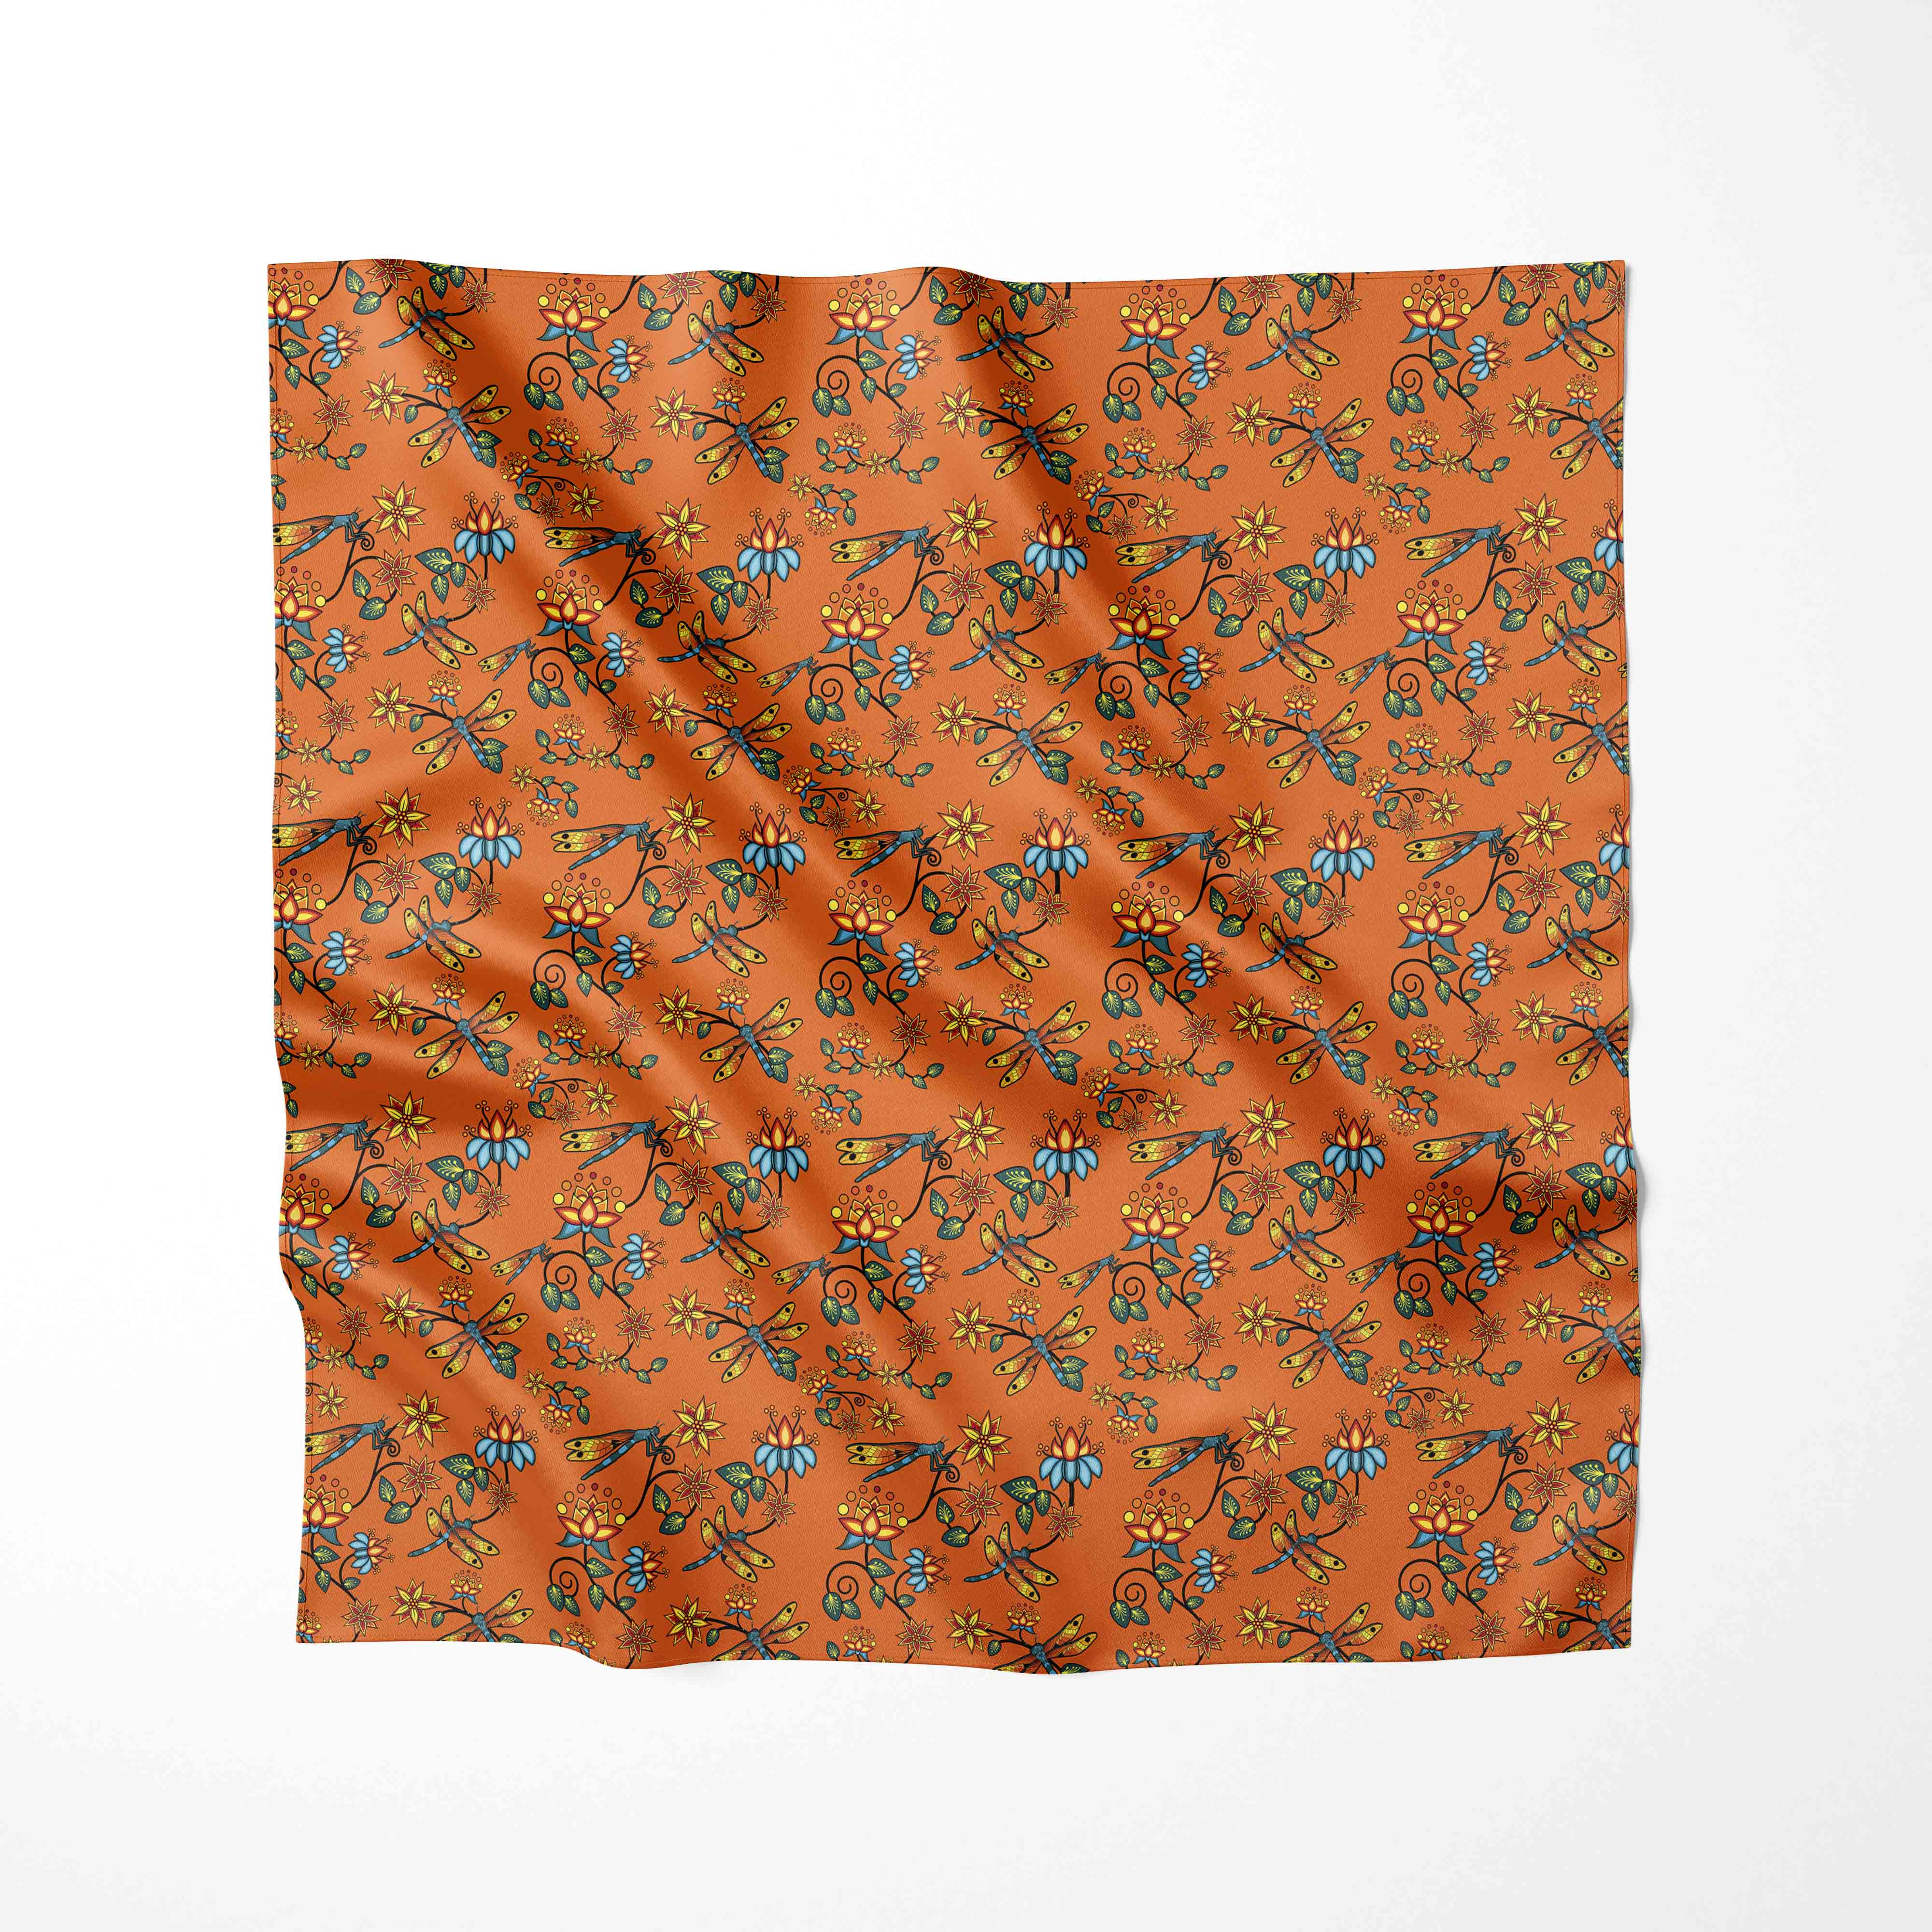 Lily Sierra Orange Cotton Poplin Fabric By the Yard